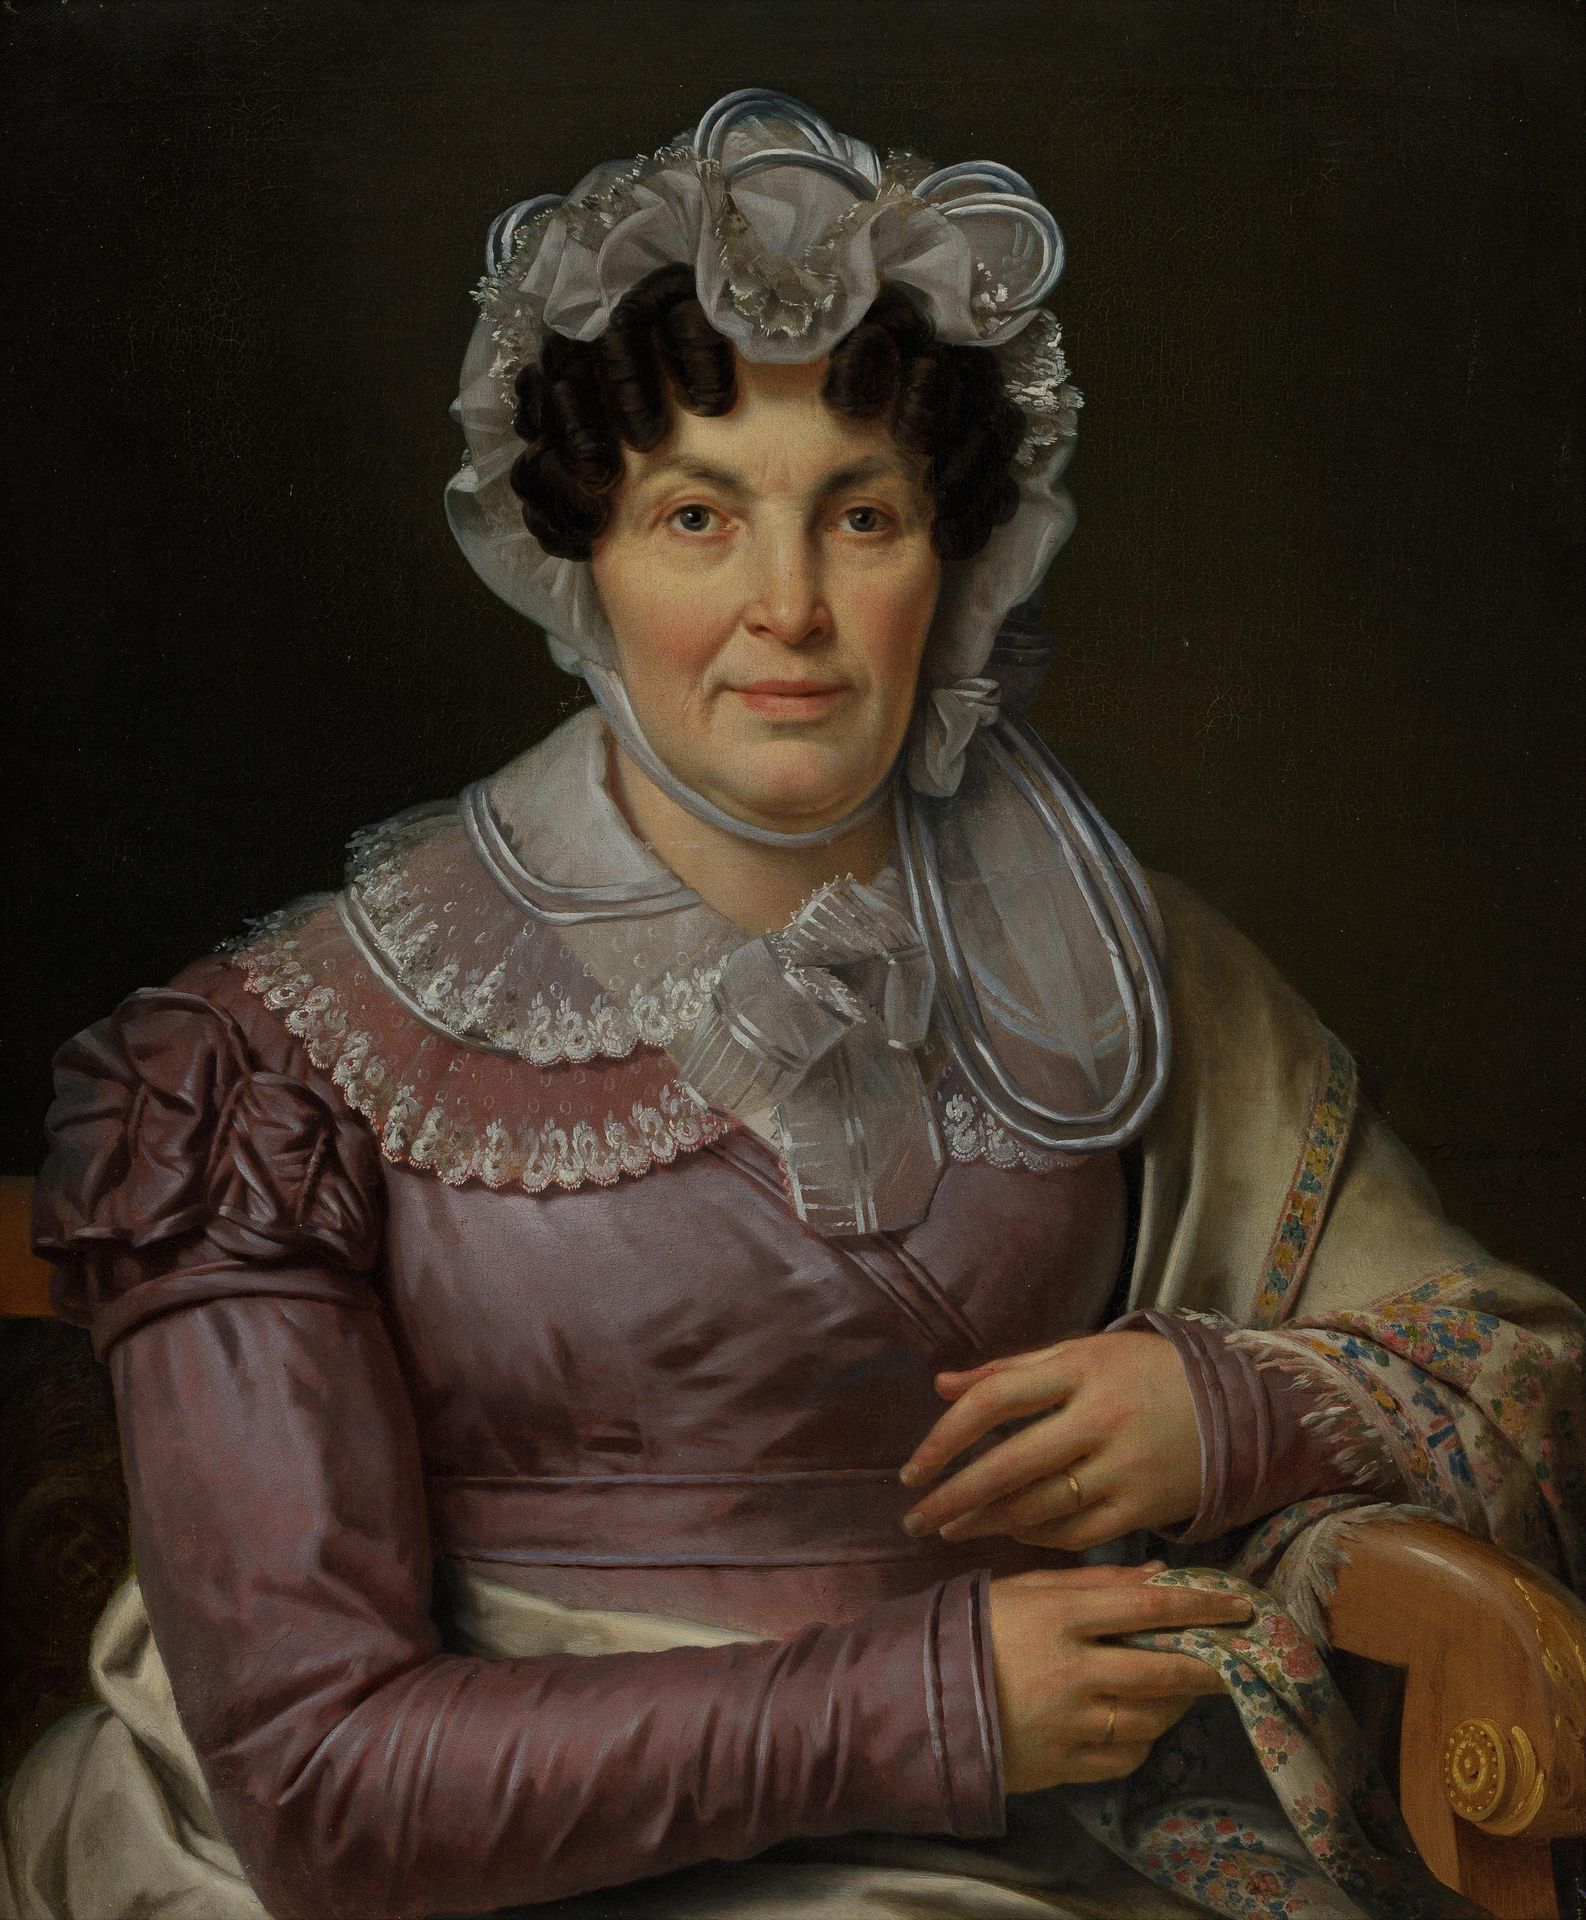 FERDINAND DE BRAEKELEER DE OUDE (1792-1883) Retrato de mujer, 1825.

De tela. 

&hellip;